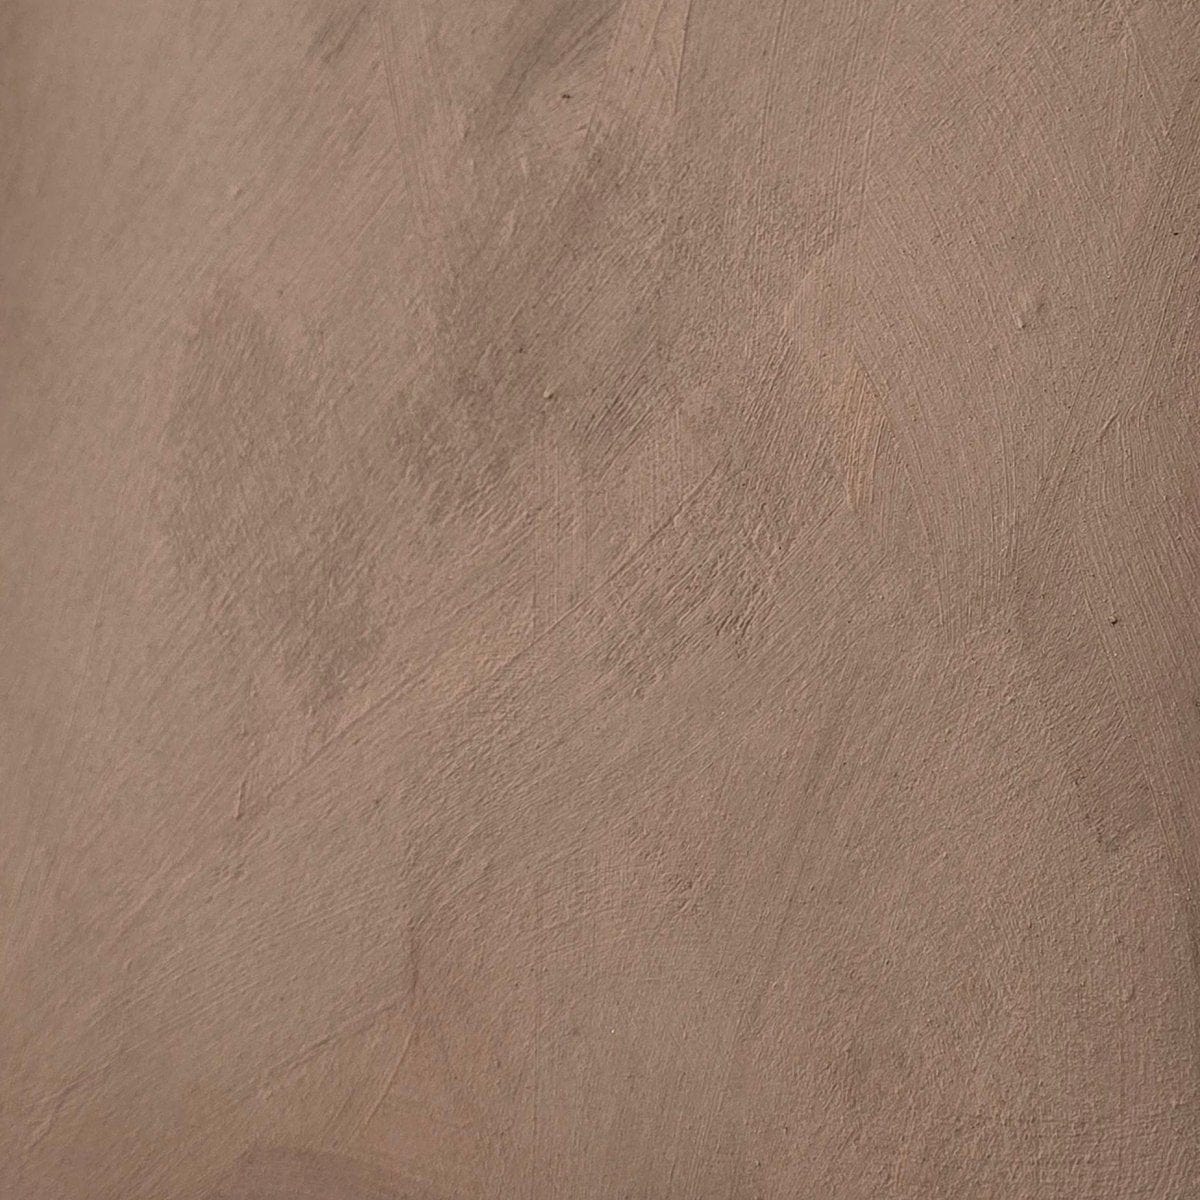 Cacao - Brown Limewash Wall Paint